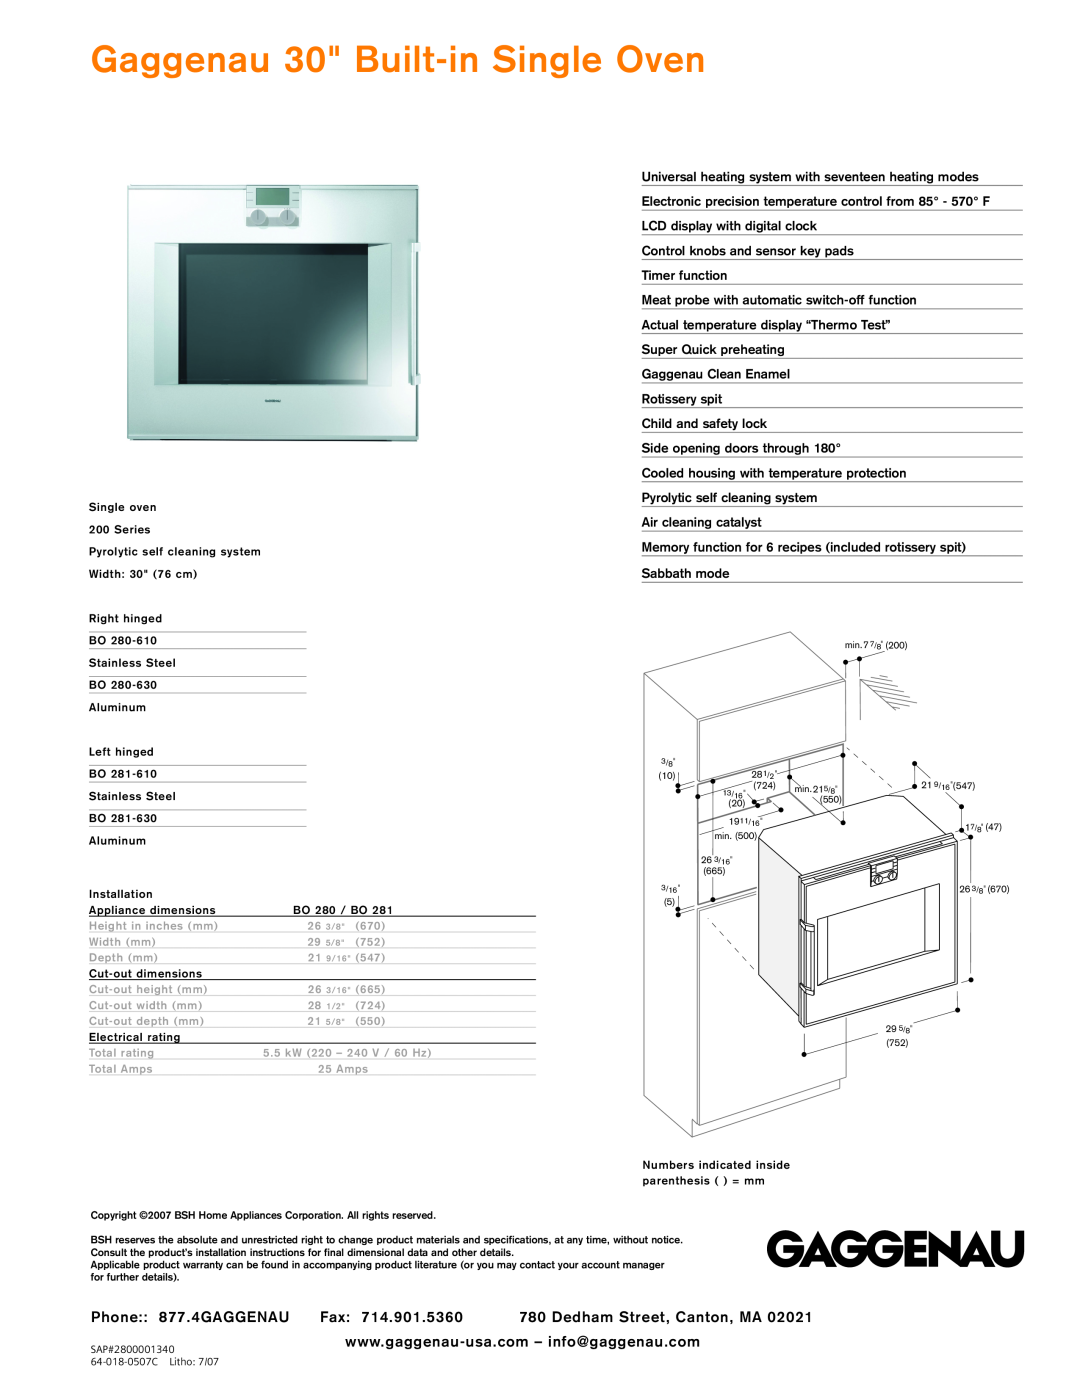 Gaggenau Built-in Single Oven dimensions Gaggenau 30 Built-inSingle Oven, Phone, 877 . 4GAGGENAU Fax 